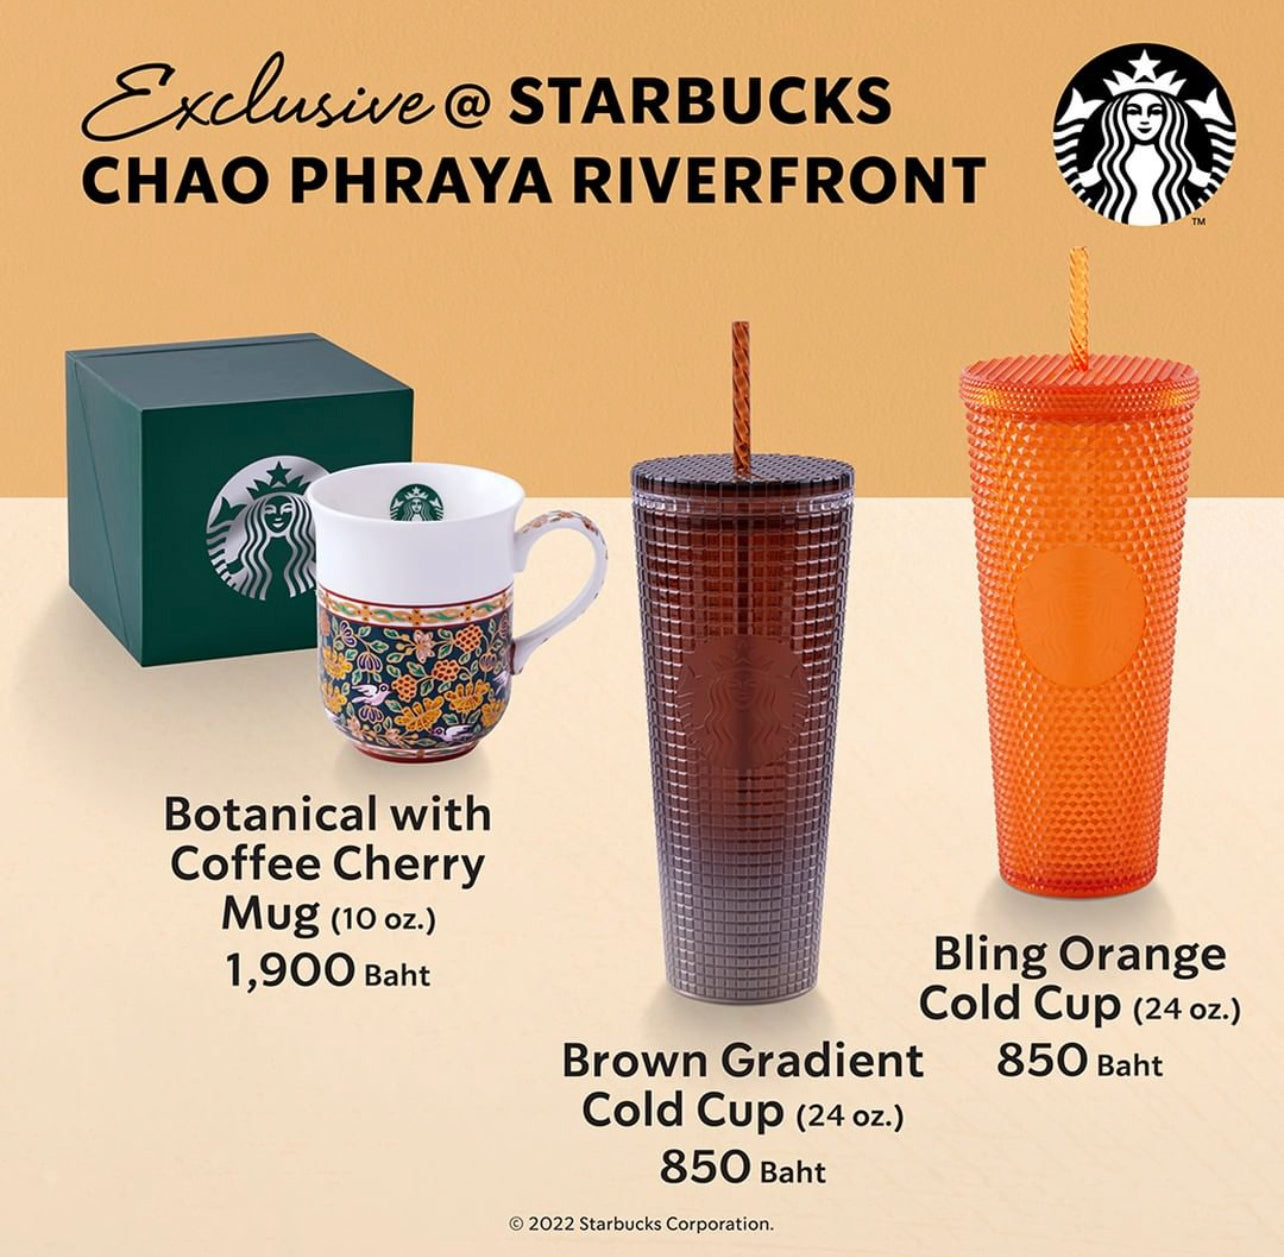 Starbucks Chao Phraya Riverfront Exclusives Orange Bling Venti Studded